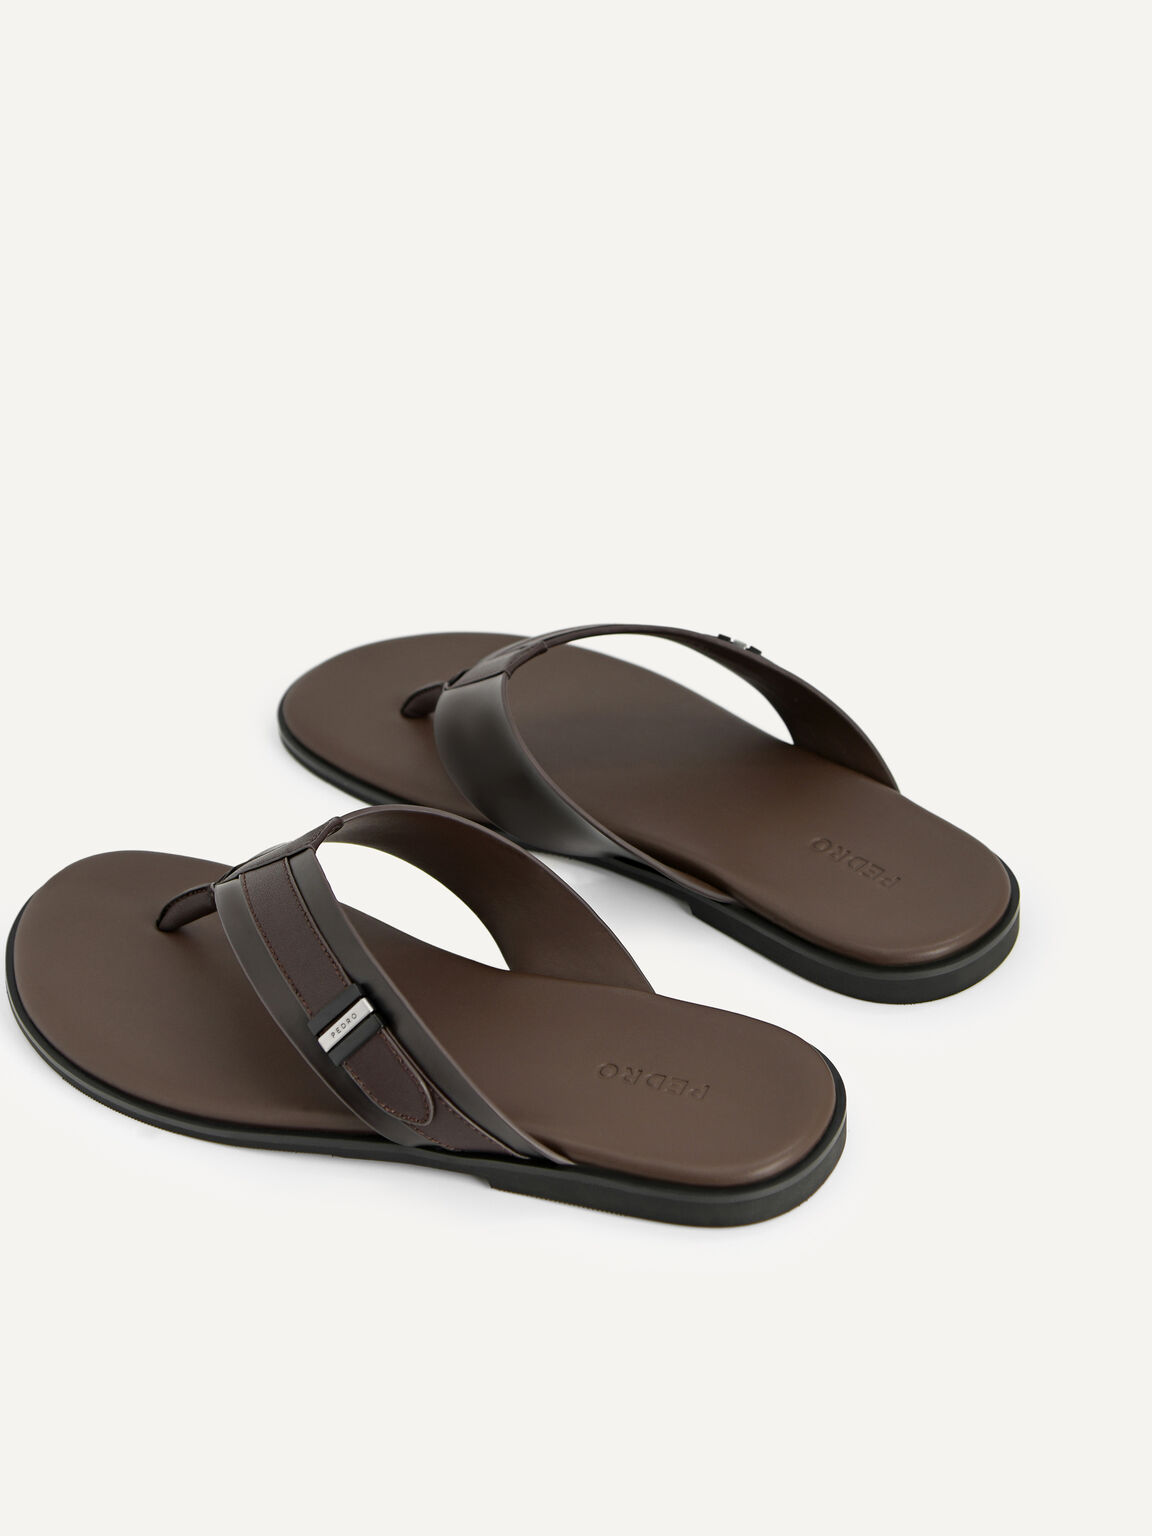 Thong Sandals, Dark Brown